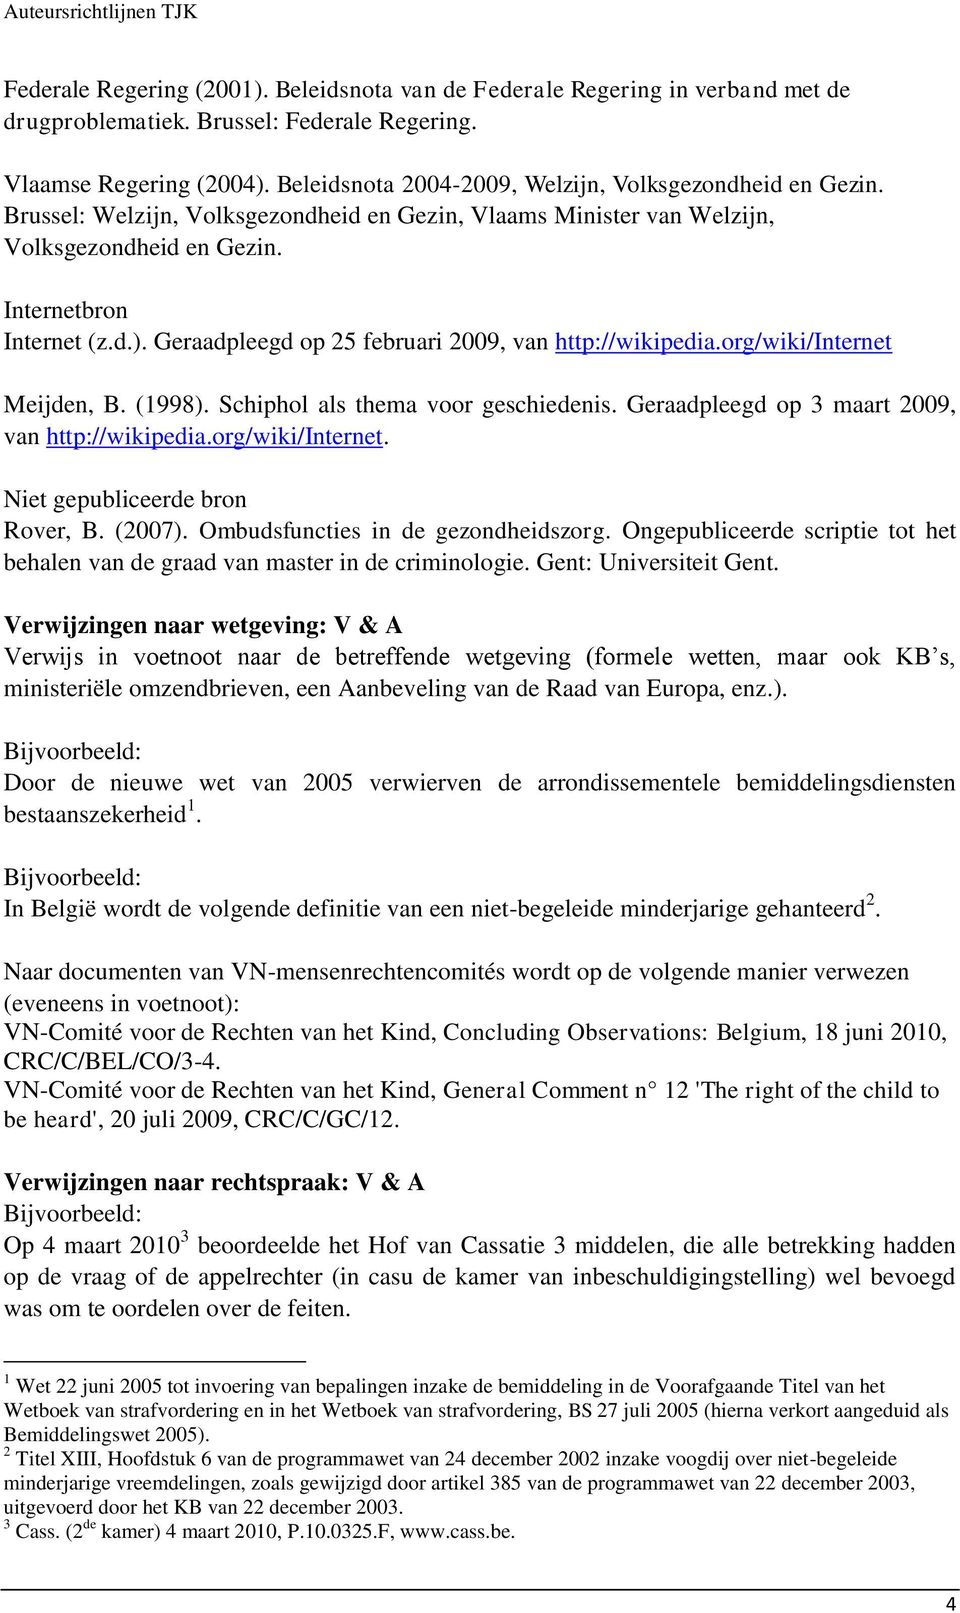 Geraadpleegd op 25 februari 2009, van http://wikipedia.org/wiki/internet Meijden, B. (1998). Schiphol als thema voor geschiedenis. Geraadpleegd op 3 maart 2009, van http://wikipedia.org/wiki/internet. Niet gepubliceerde bron Rover, B.